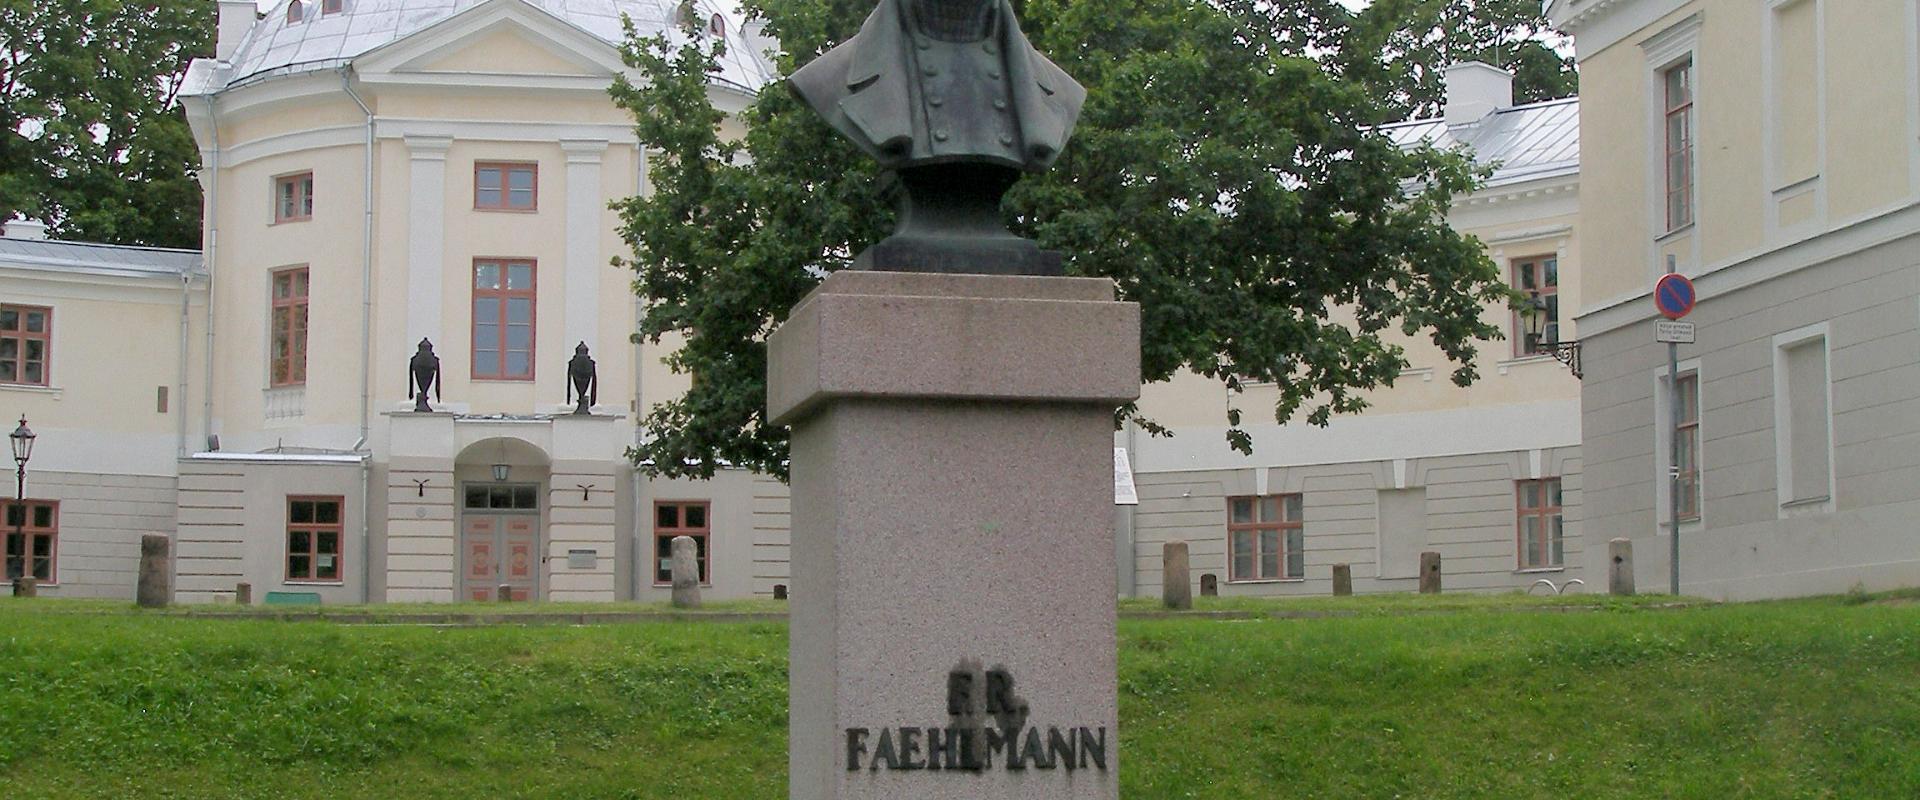 Fr. R. Faehlmanni monument